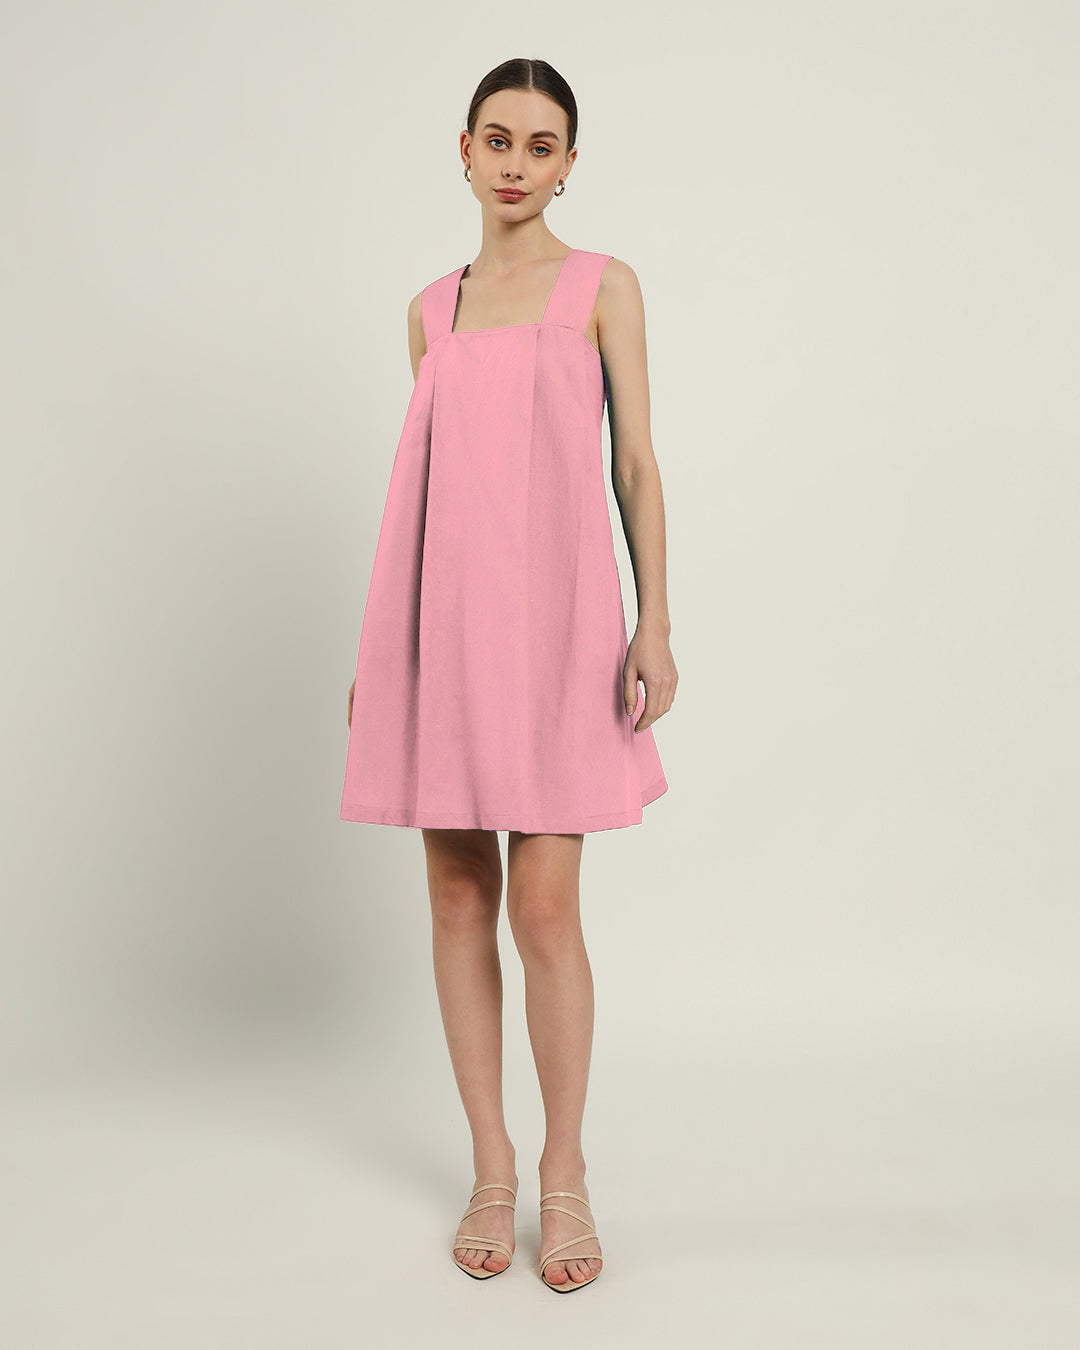 The Larissa Pink Mist Dress